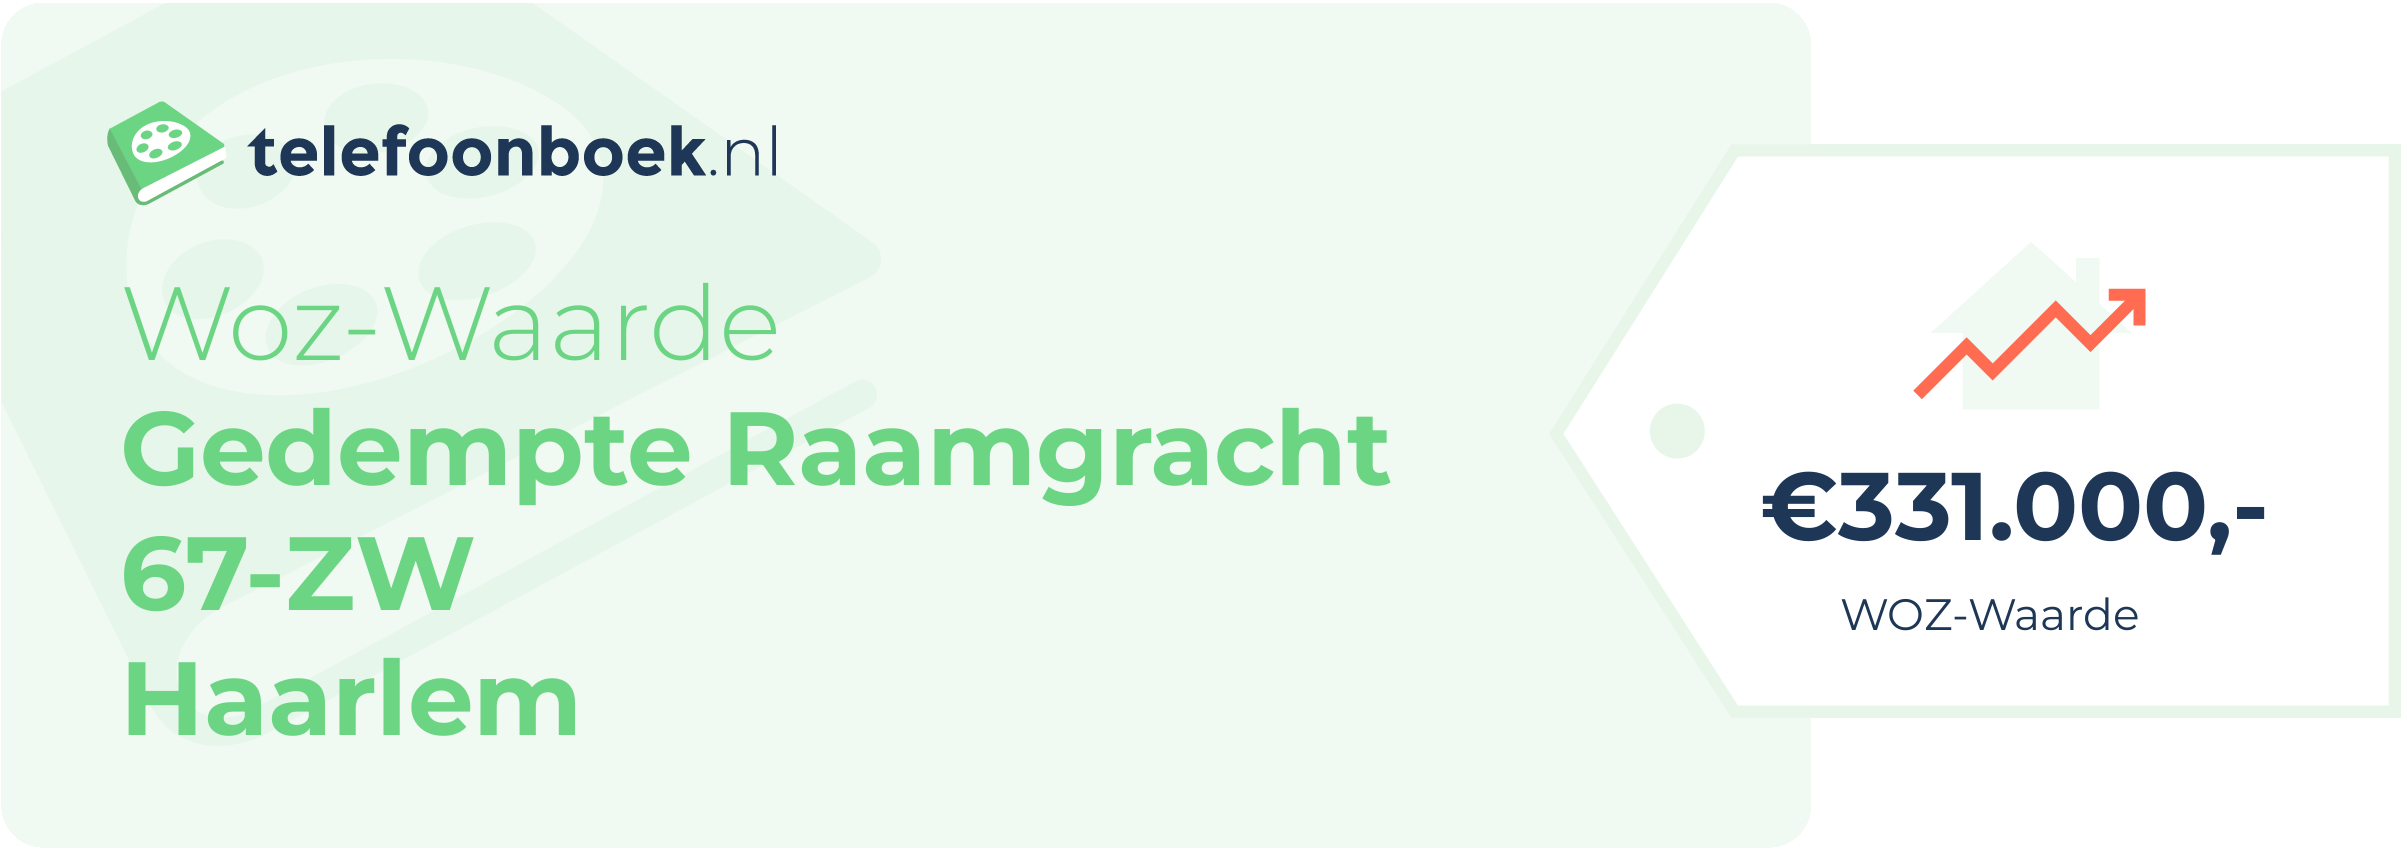 WOZ-waarde Gedempte Raamgracht 67-ZW Haarlem